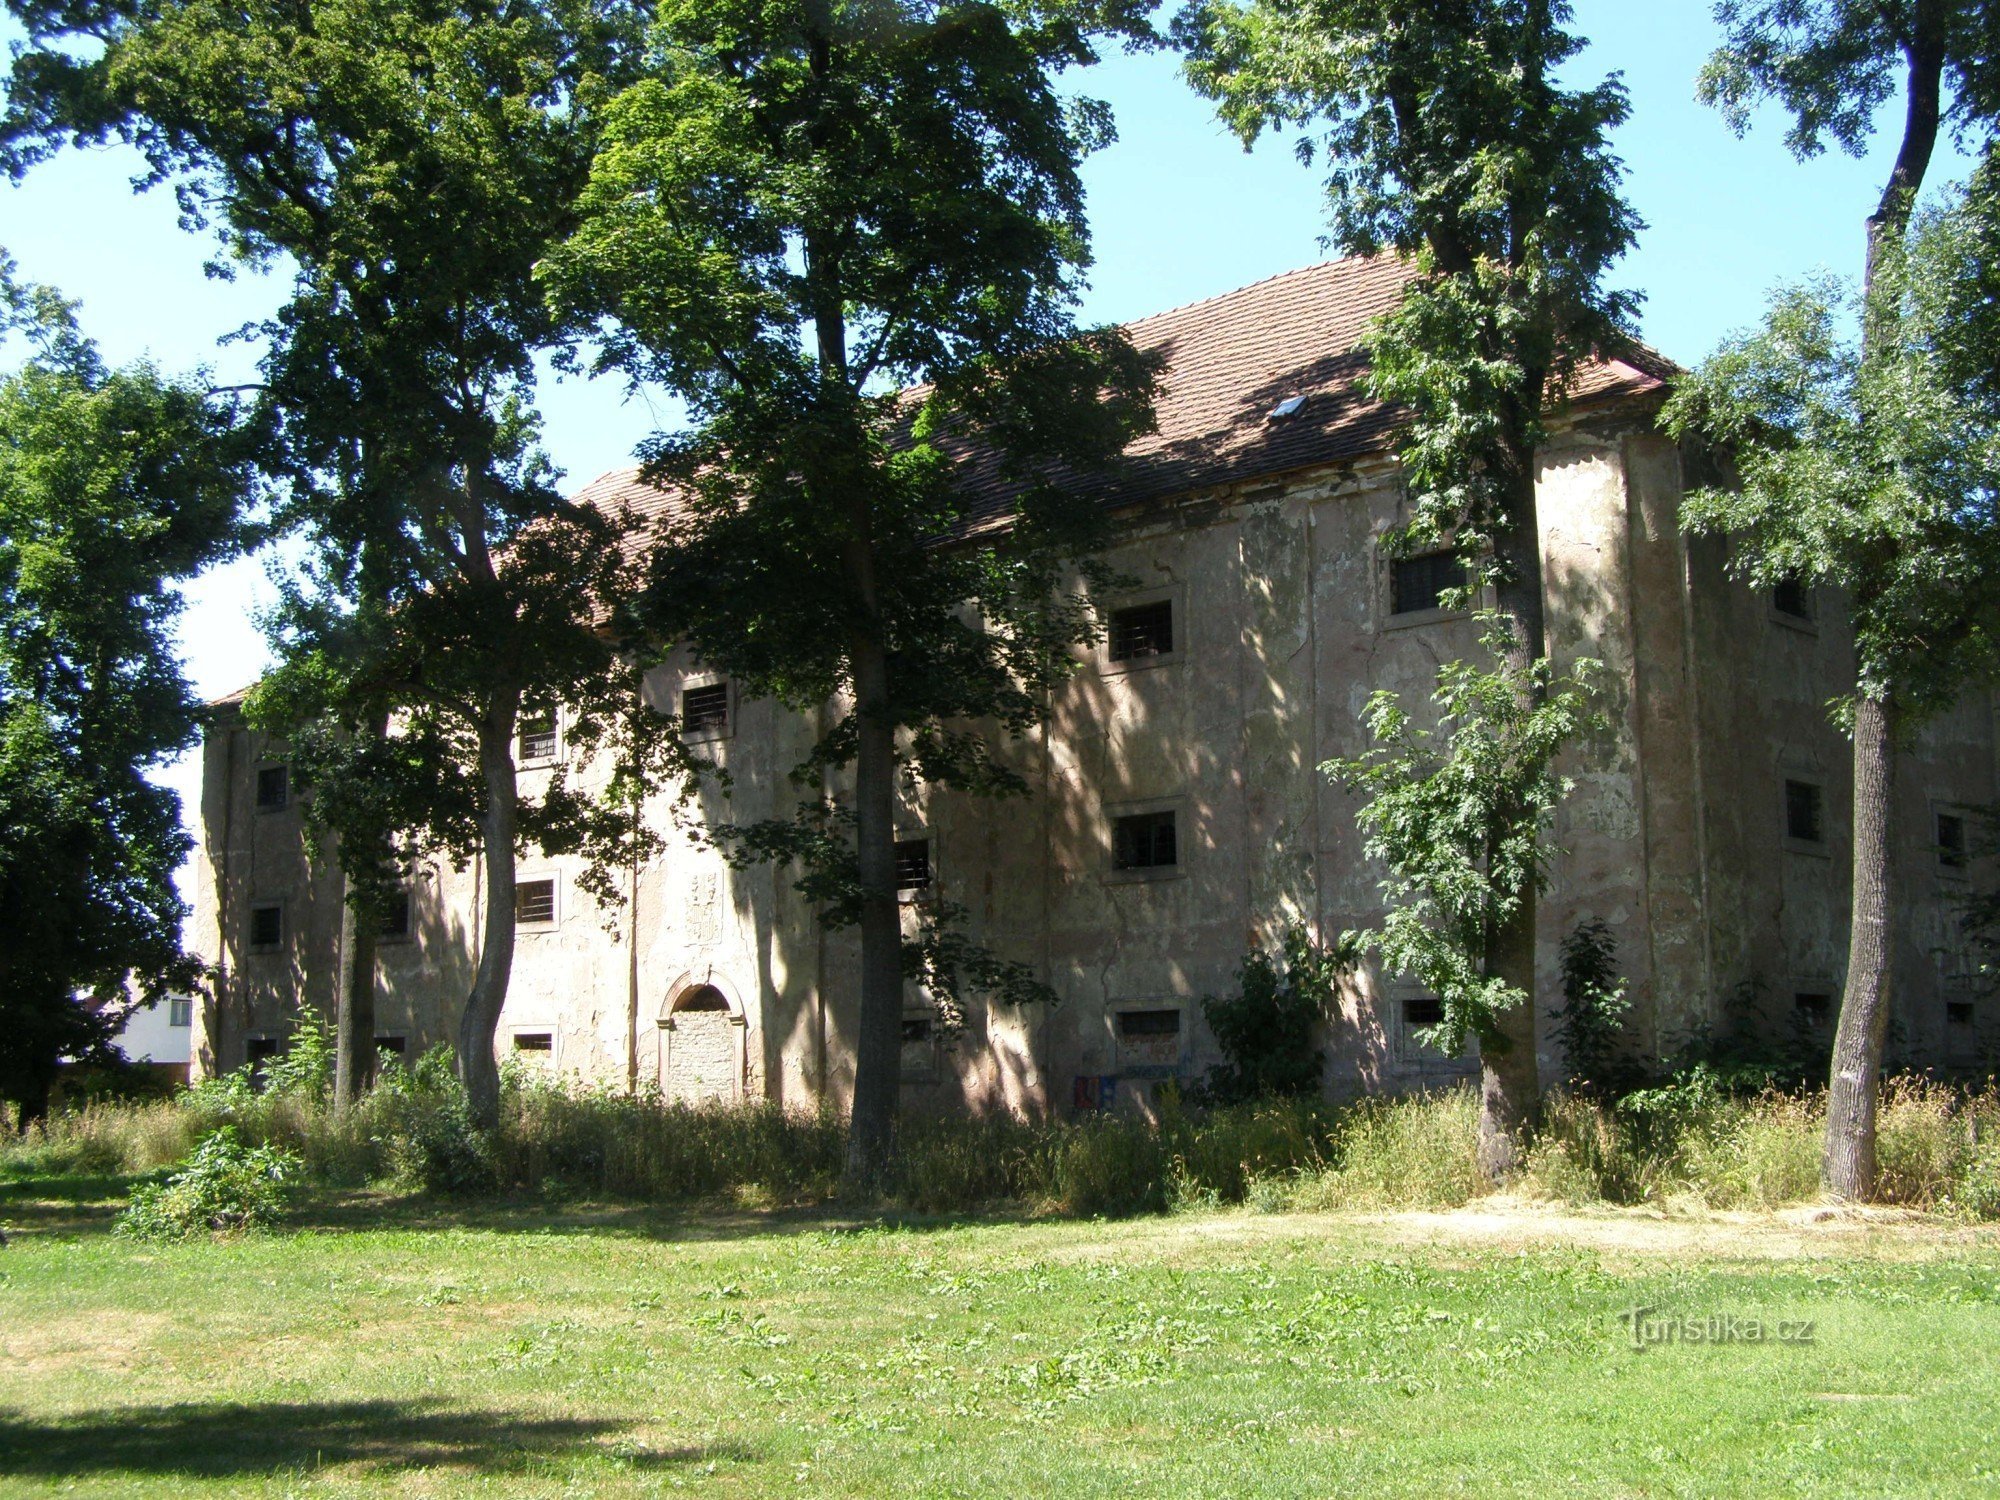 Bělohrad toplice - dvorac žitnica